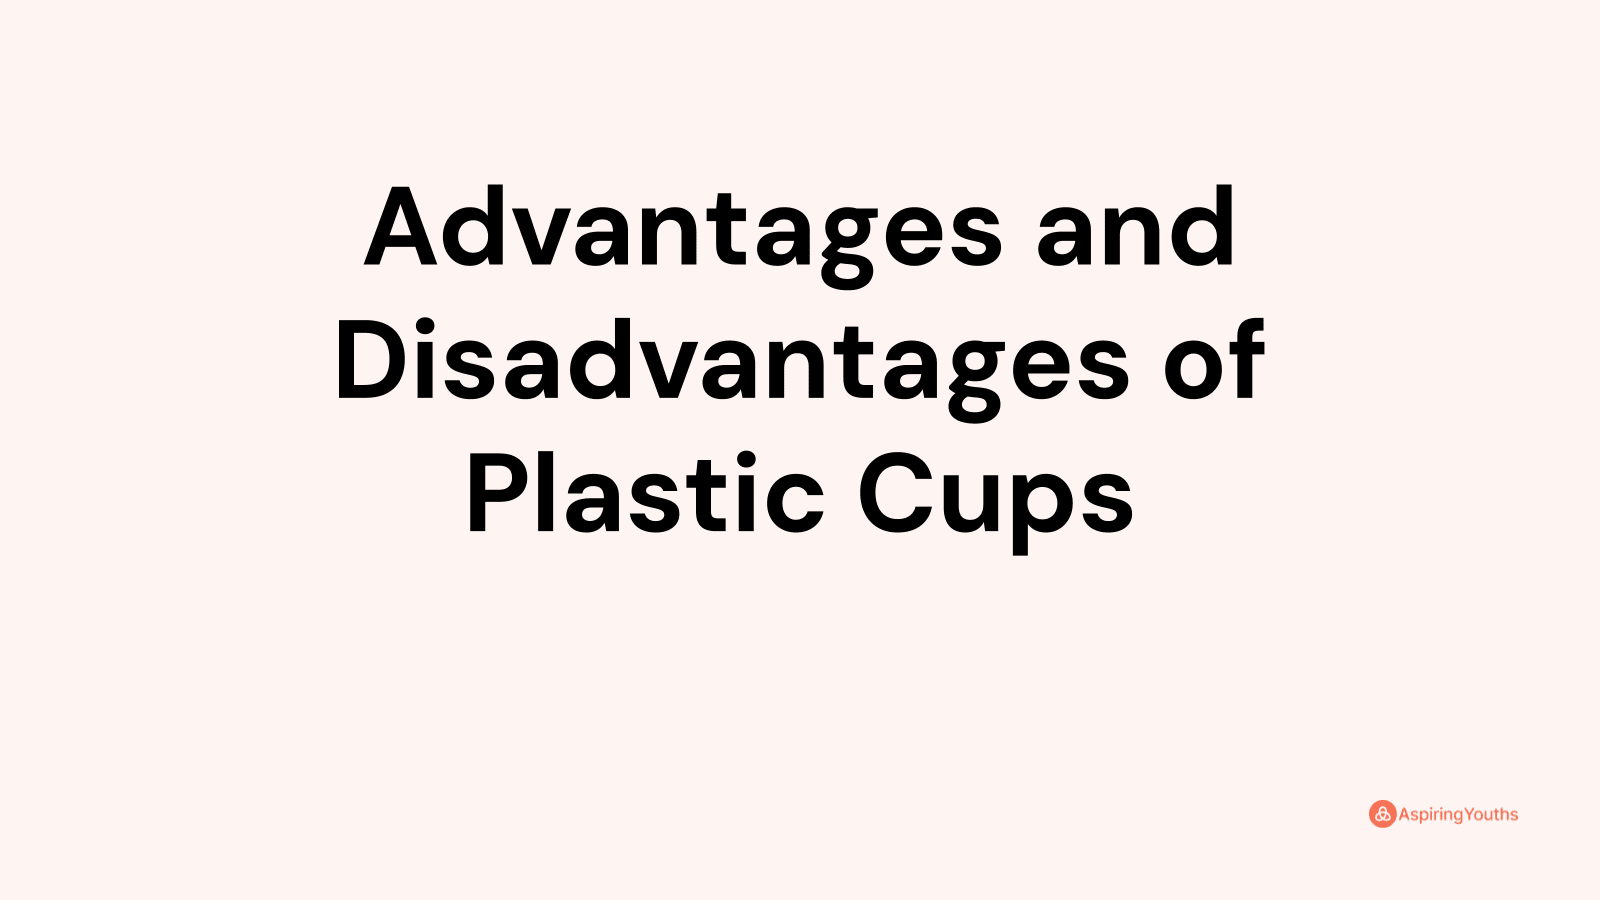 Advantages and disadvantages of Plastic Cups